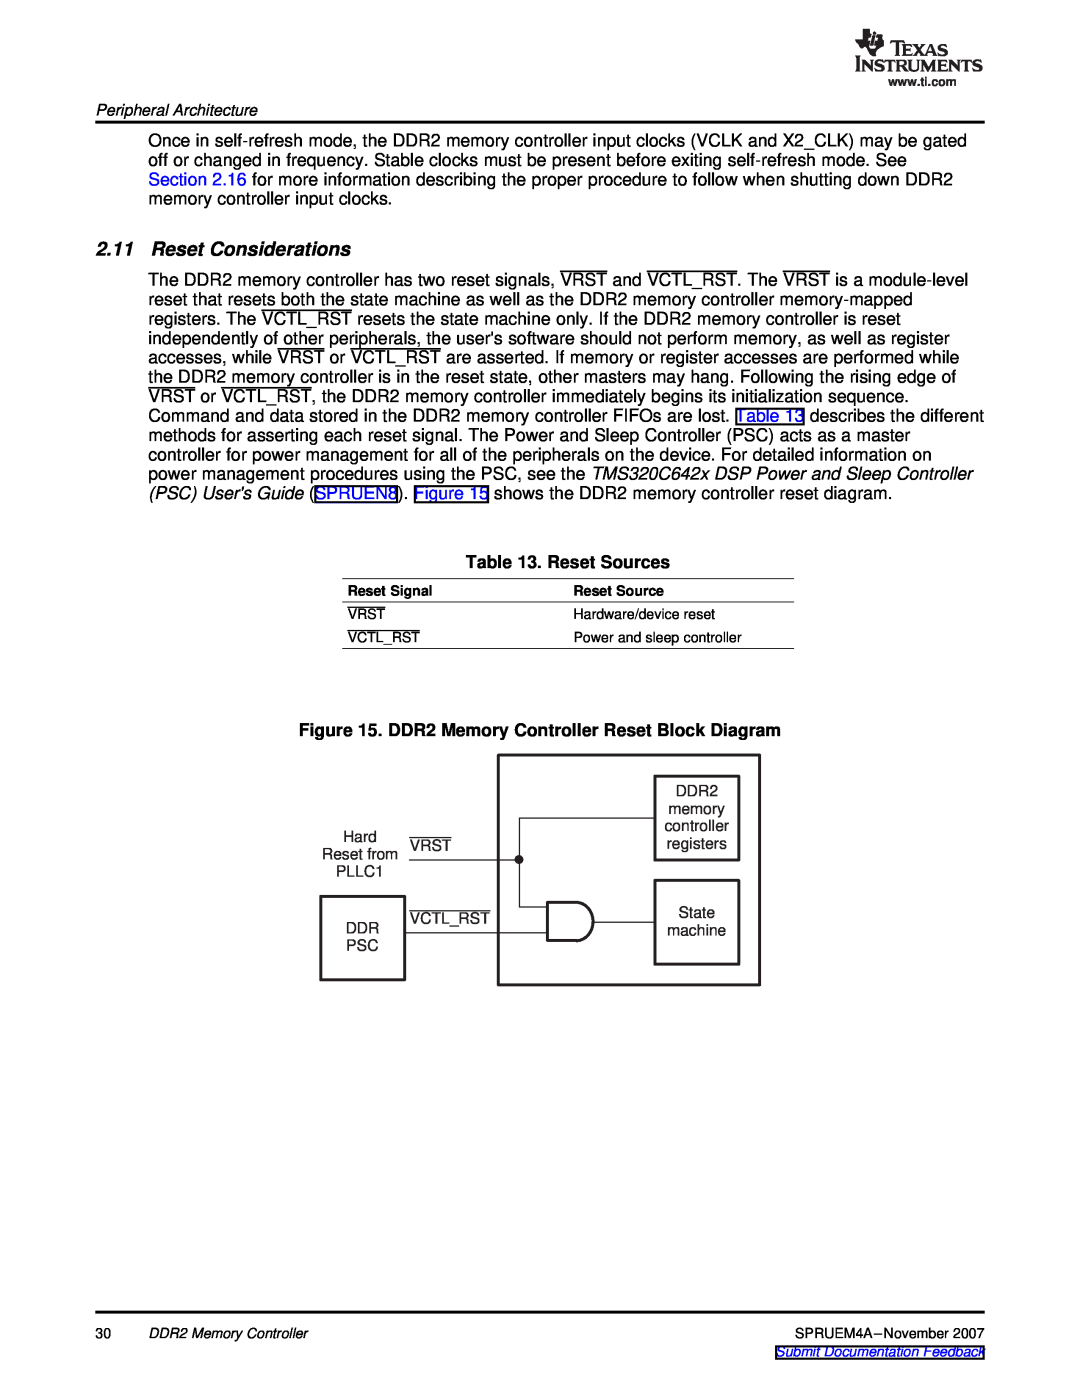 Texas Instruments TMS320C642x DSP manual Reset Considerations, Reset Sources, DDR2 Memory Controller Reset Block Diagram 